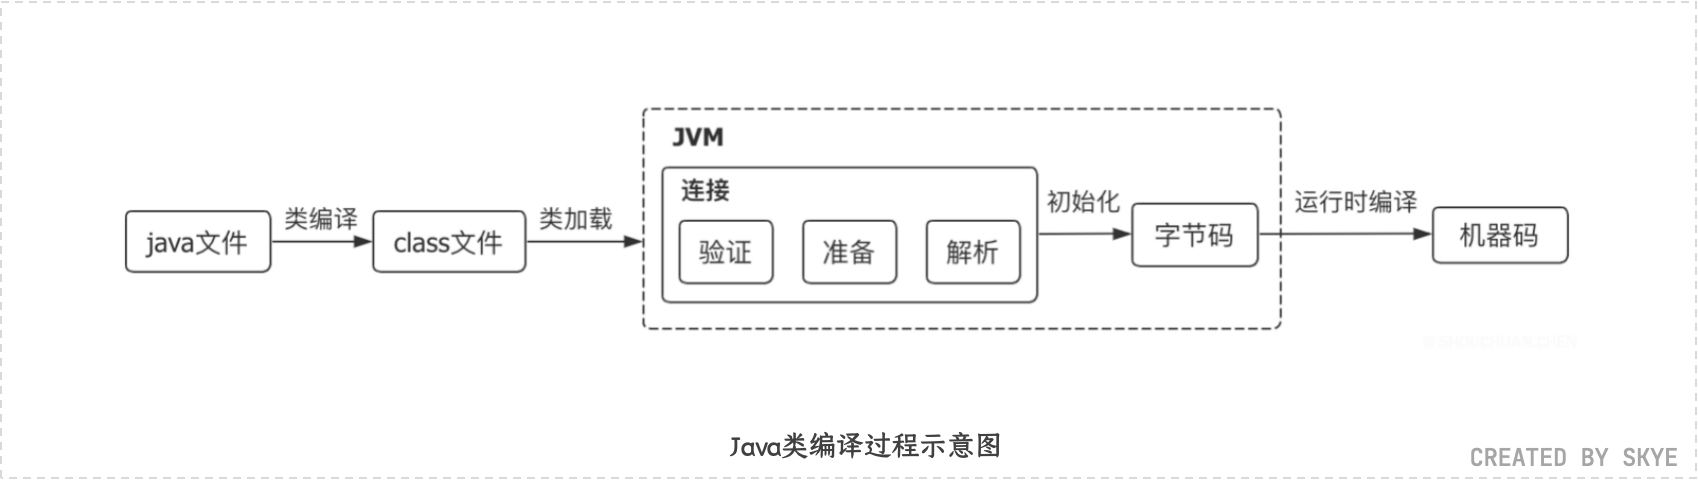 Java类编译过程示意图